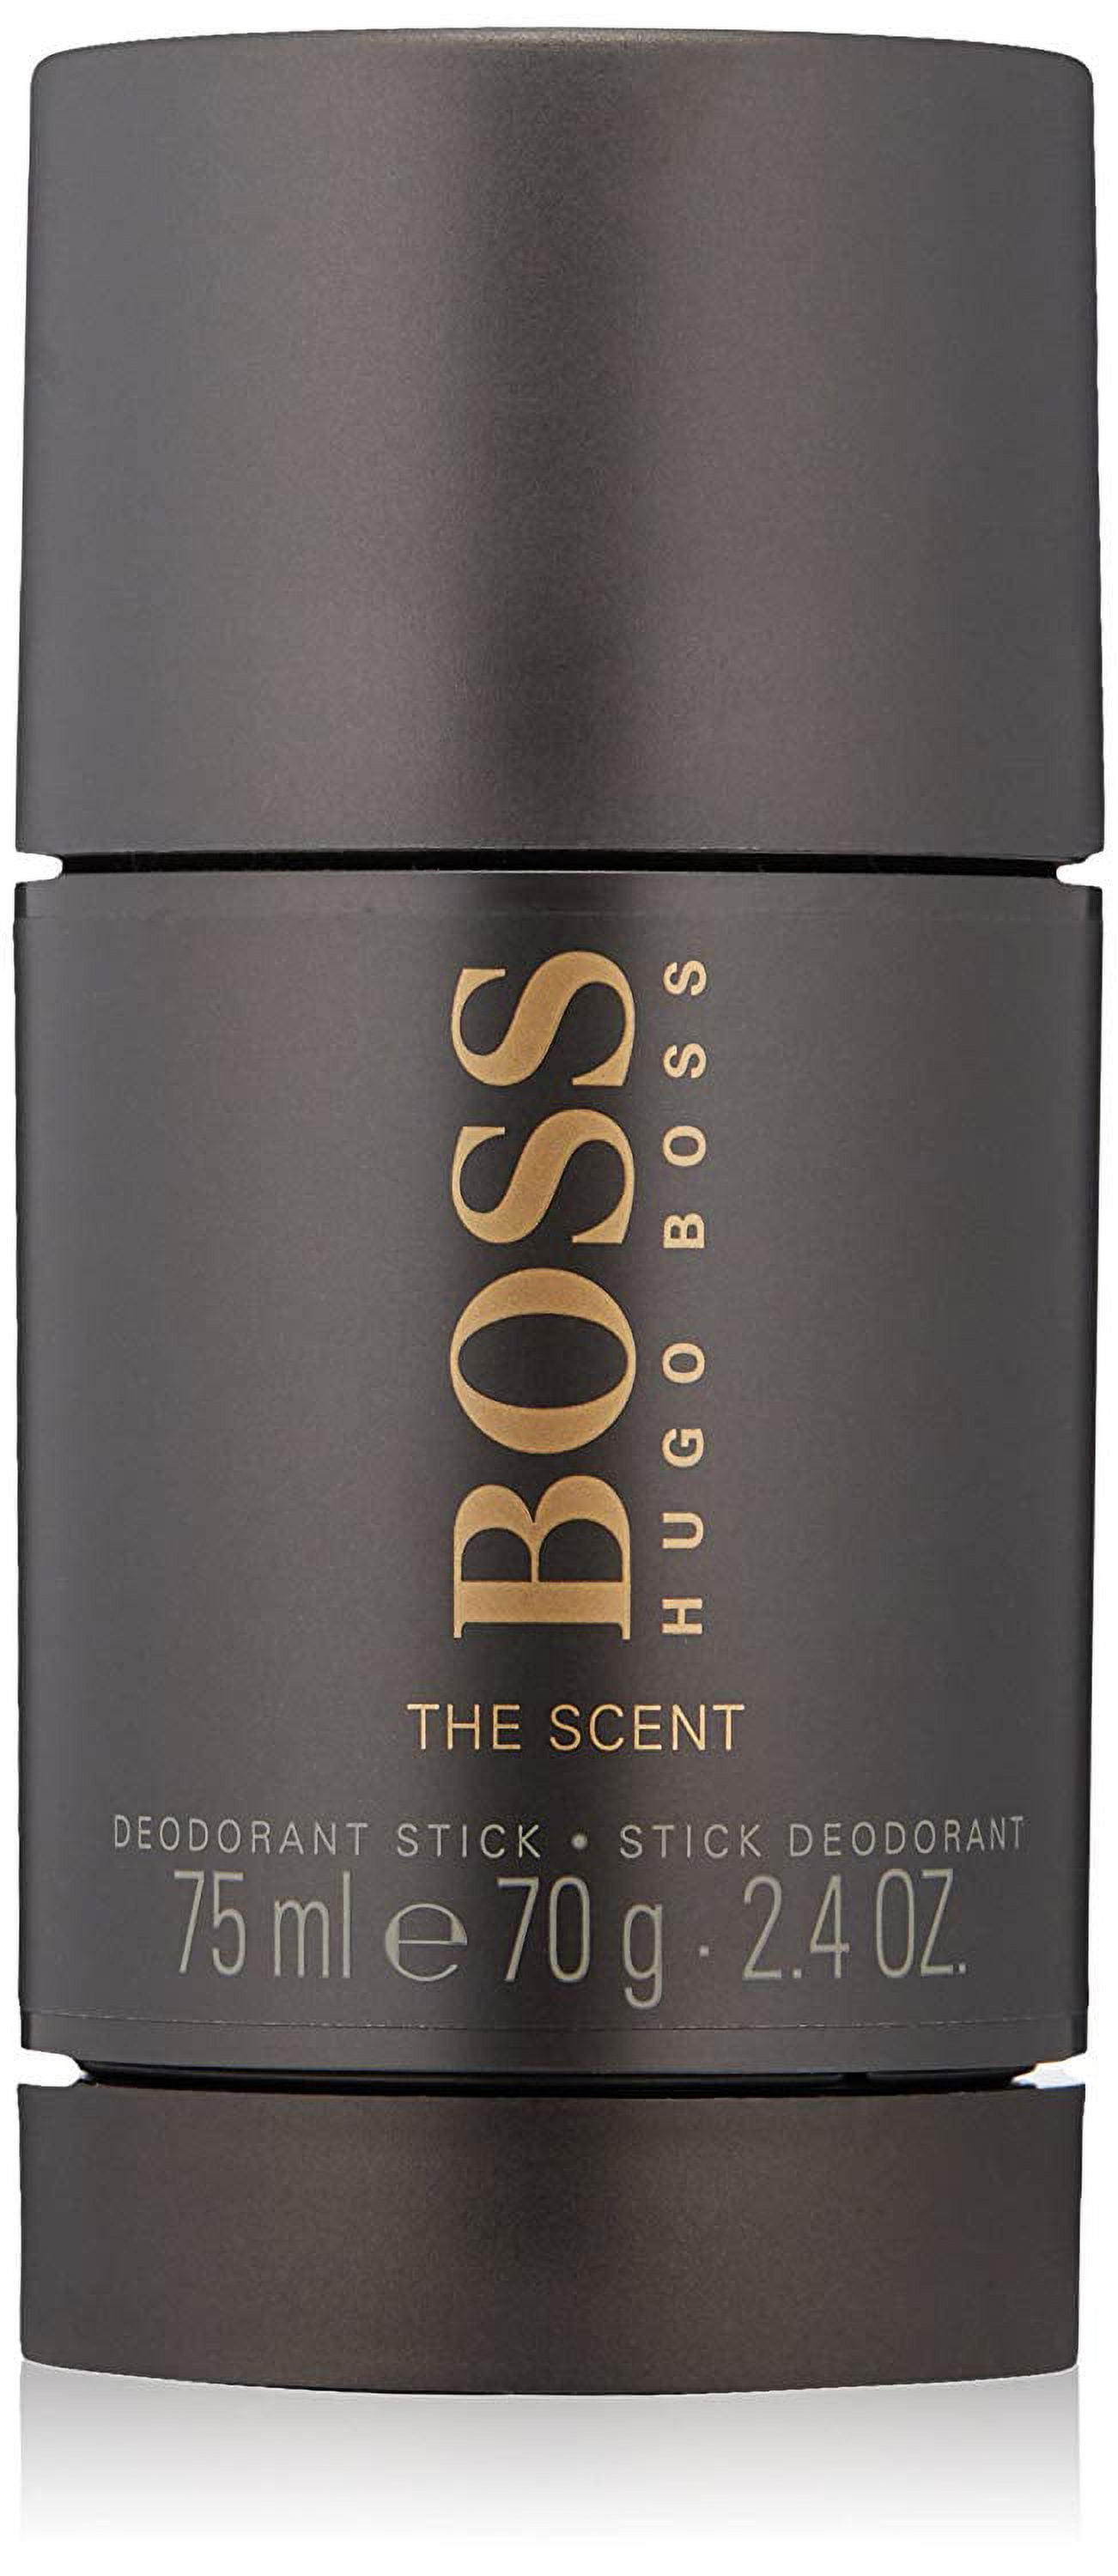 Hugo Boss THE SCENT Deodorant Stick, 3.2 oz